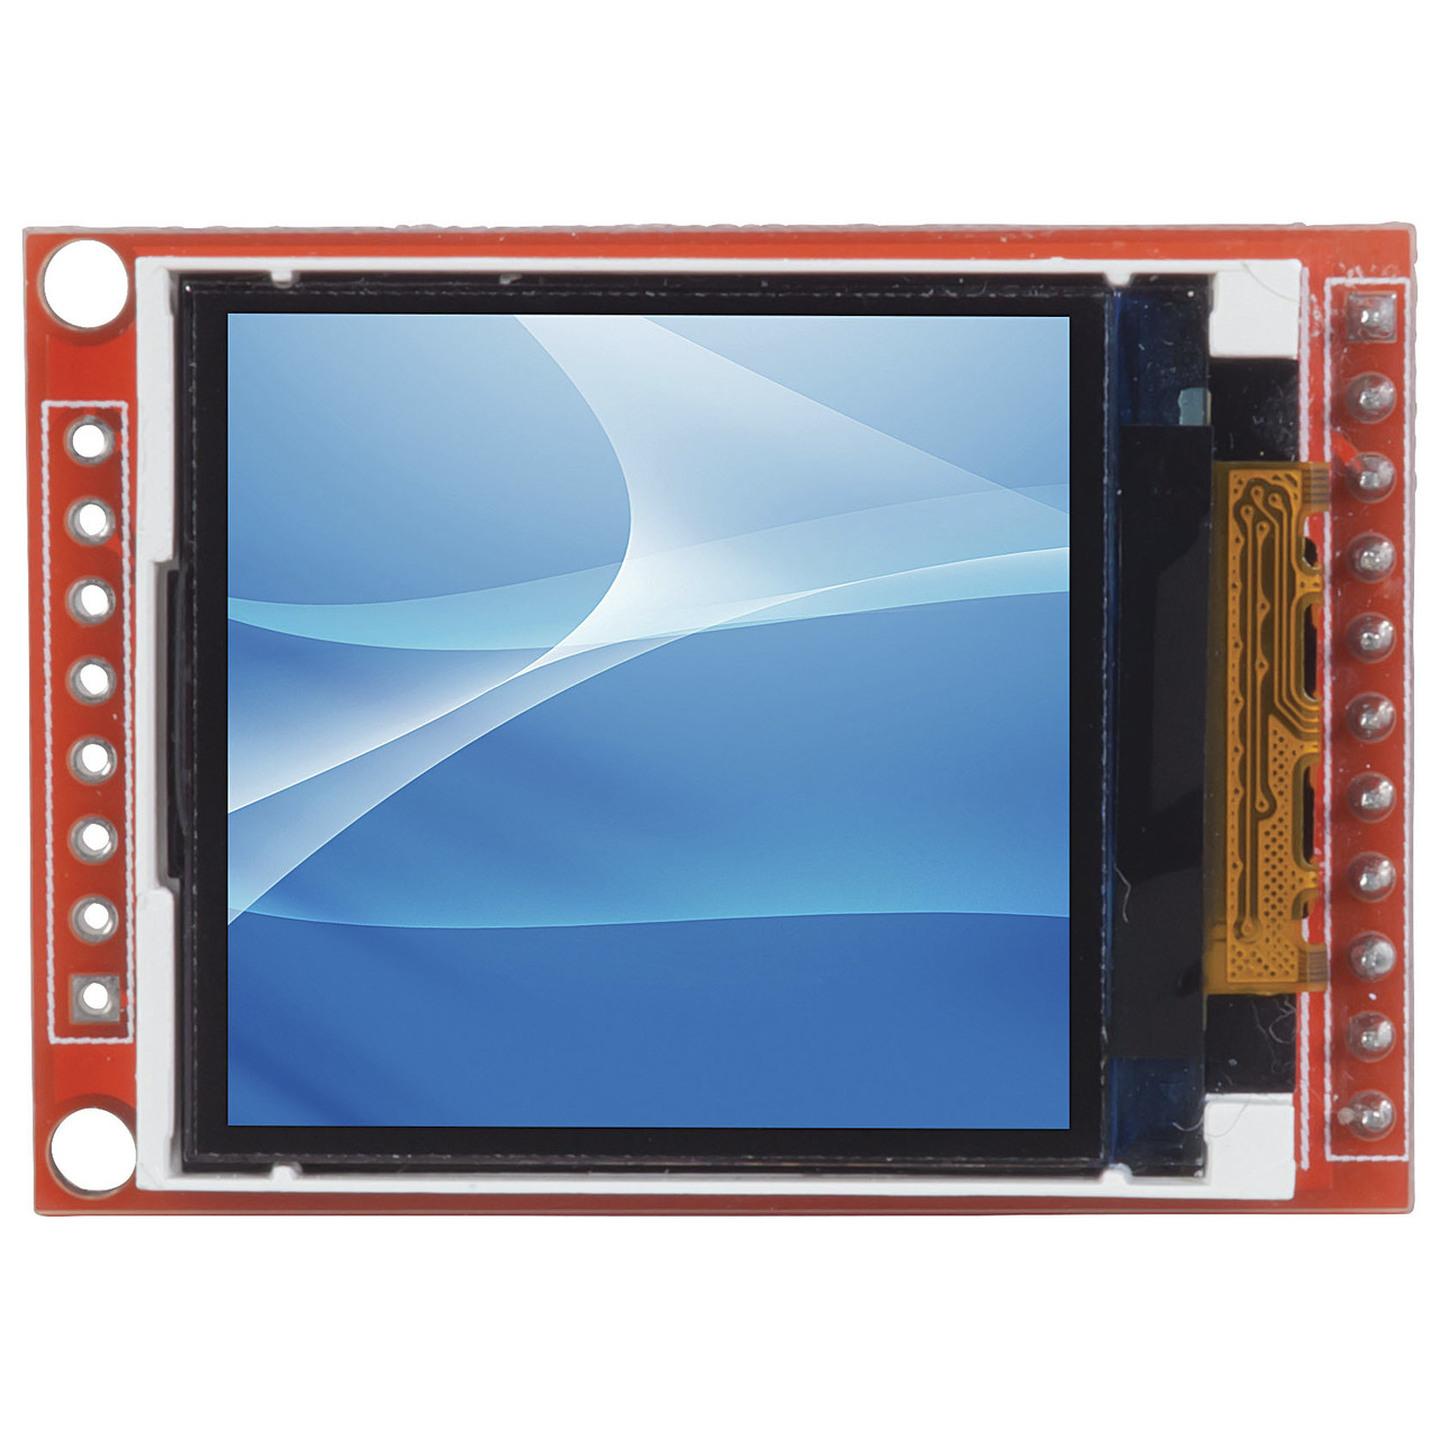 128x128 LCD Screen Module for Arduino